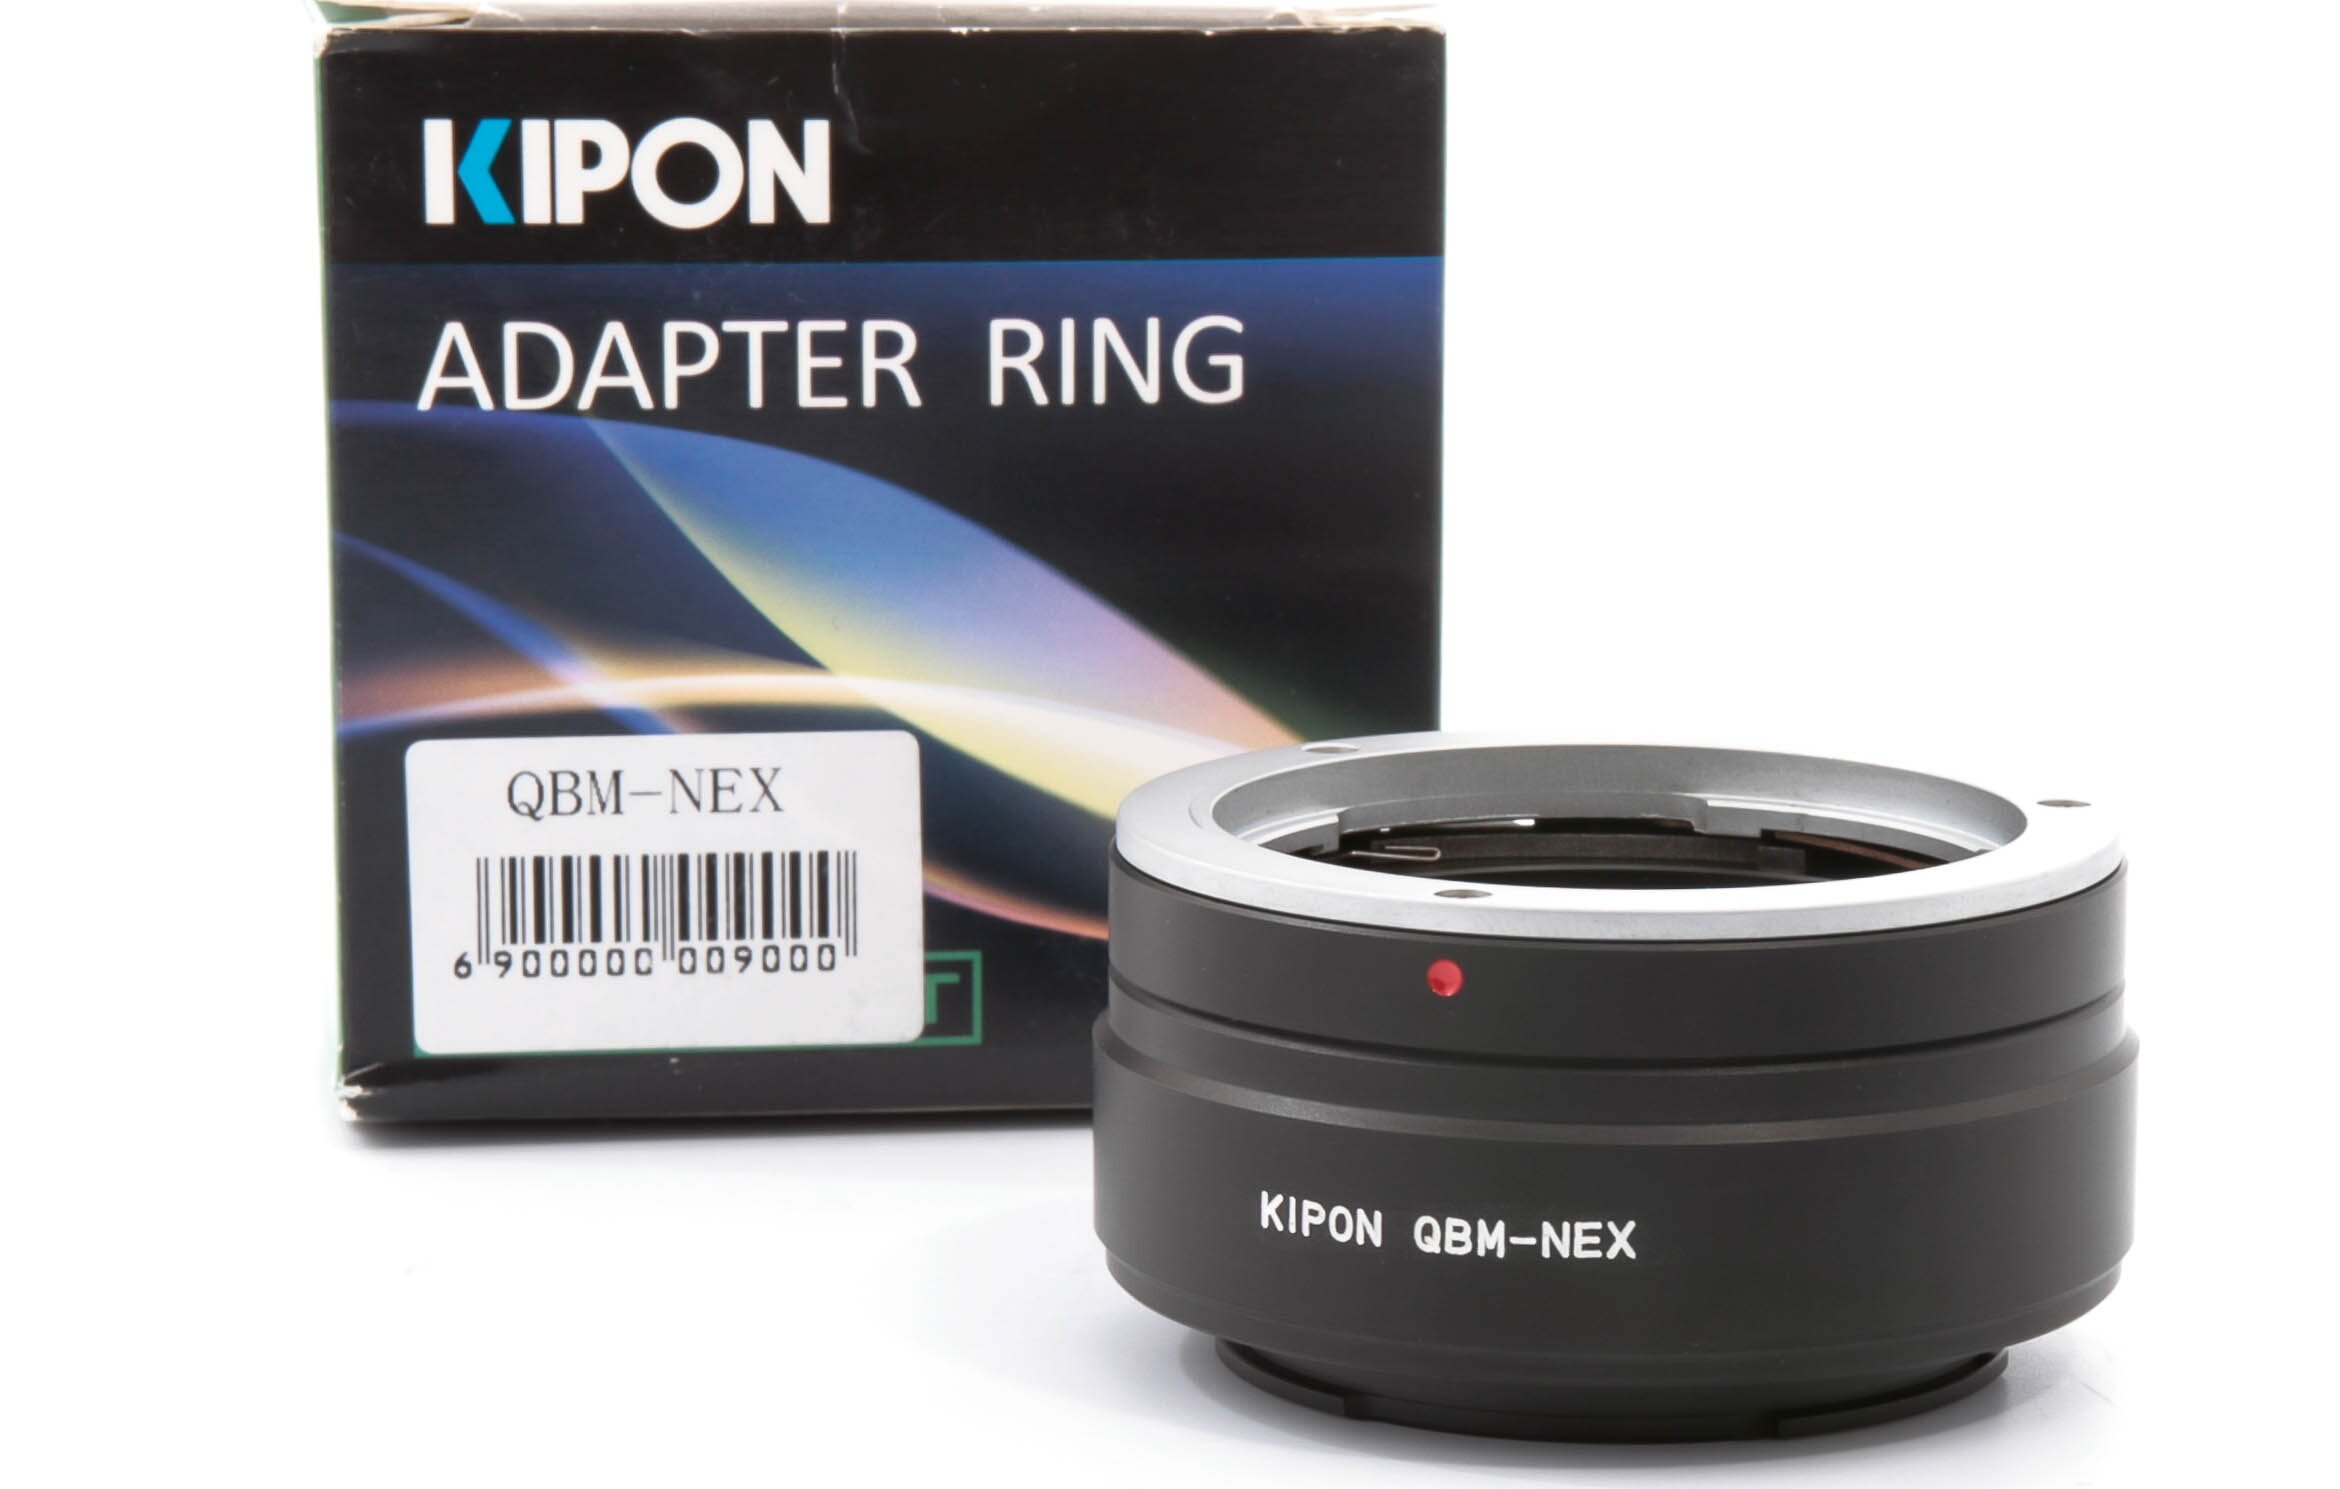 Kipon Adapter Ring Rollei SLR - Sony NEX E-Mount